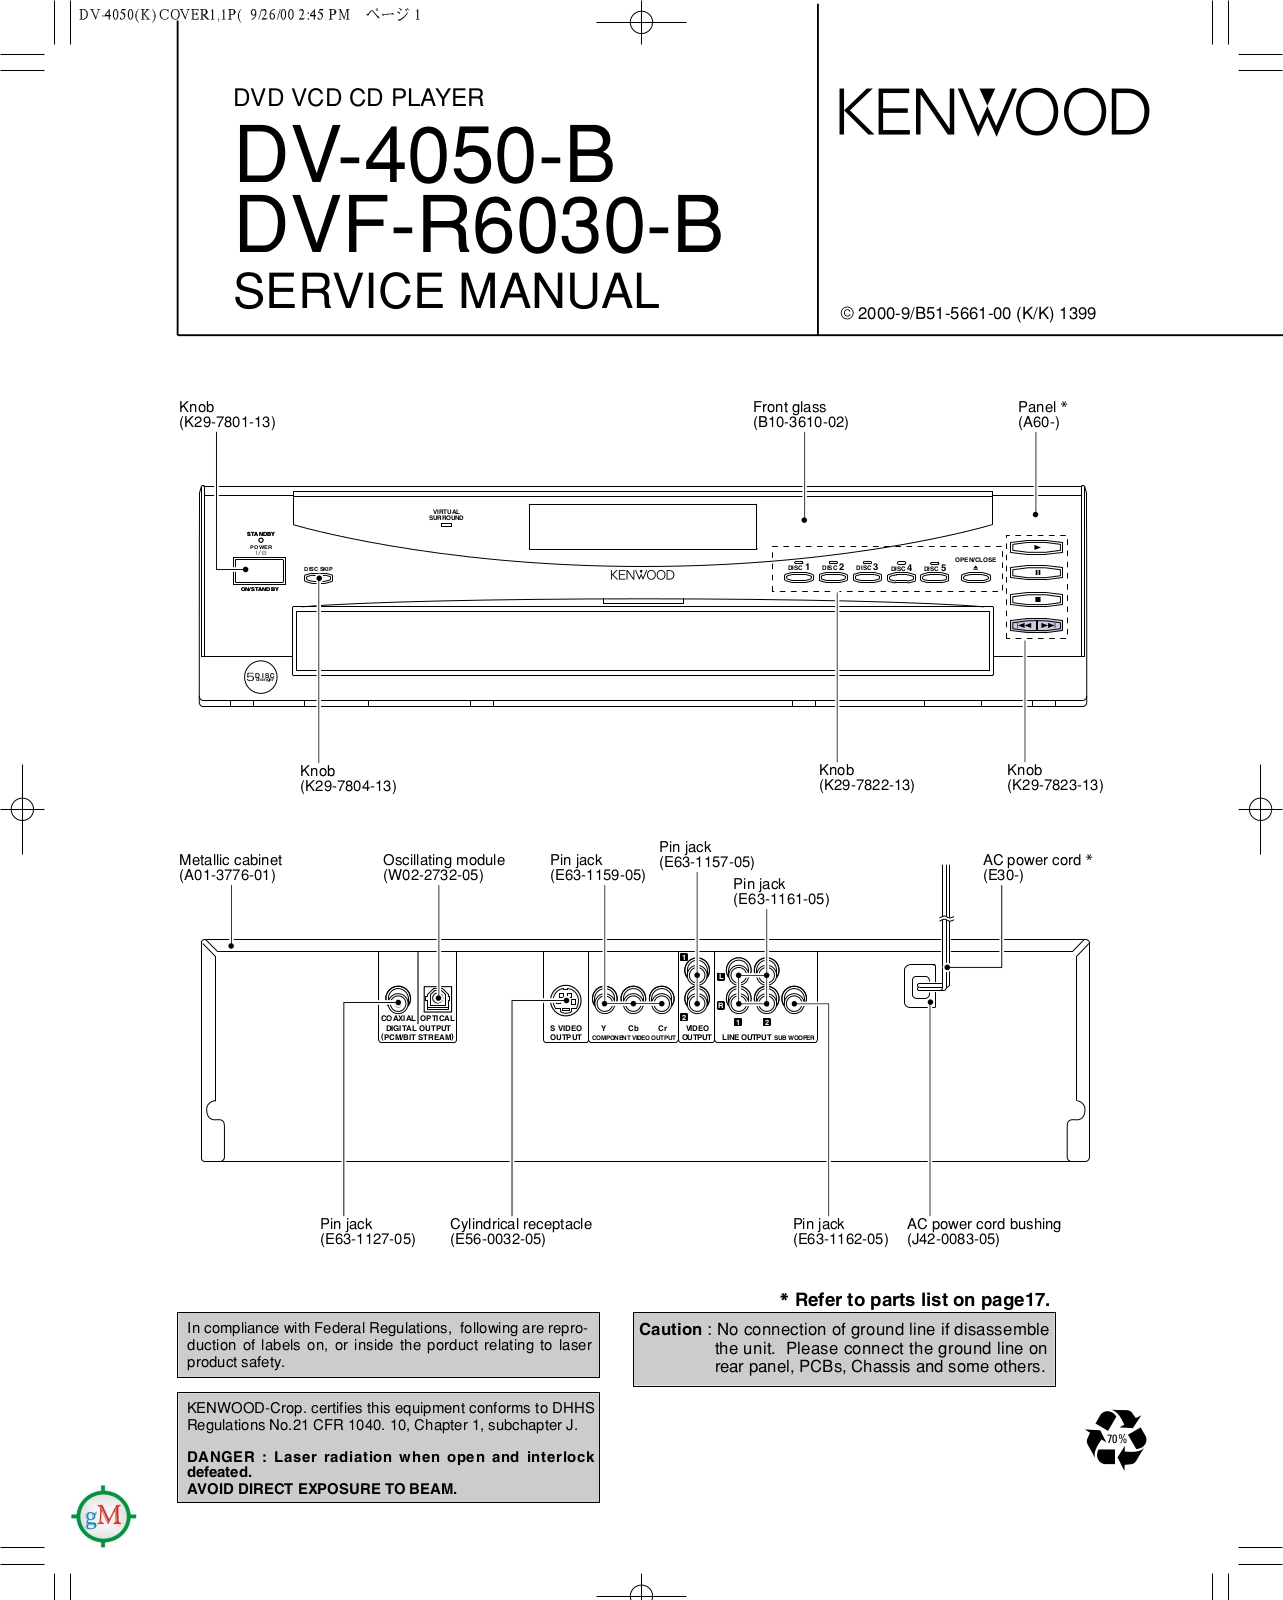 Kenwood DV-4050-B, DVFR-6030-B Service manual